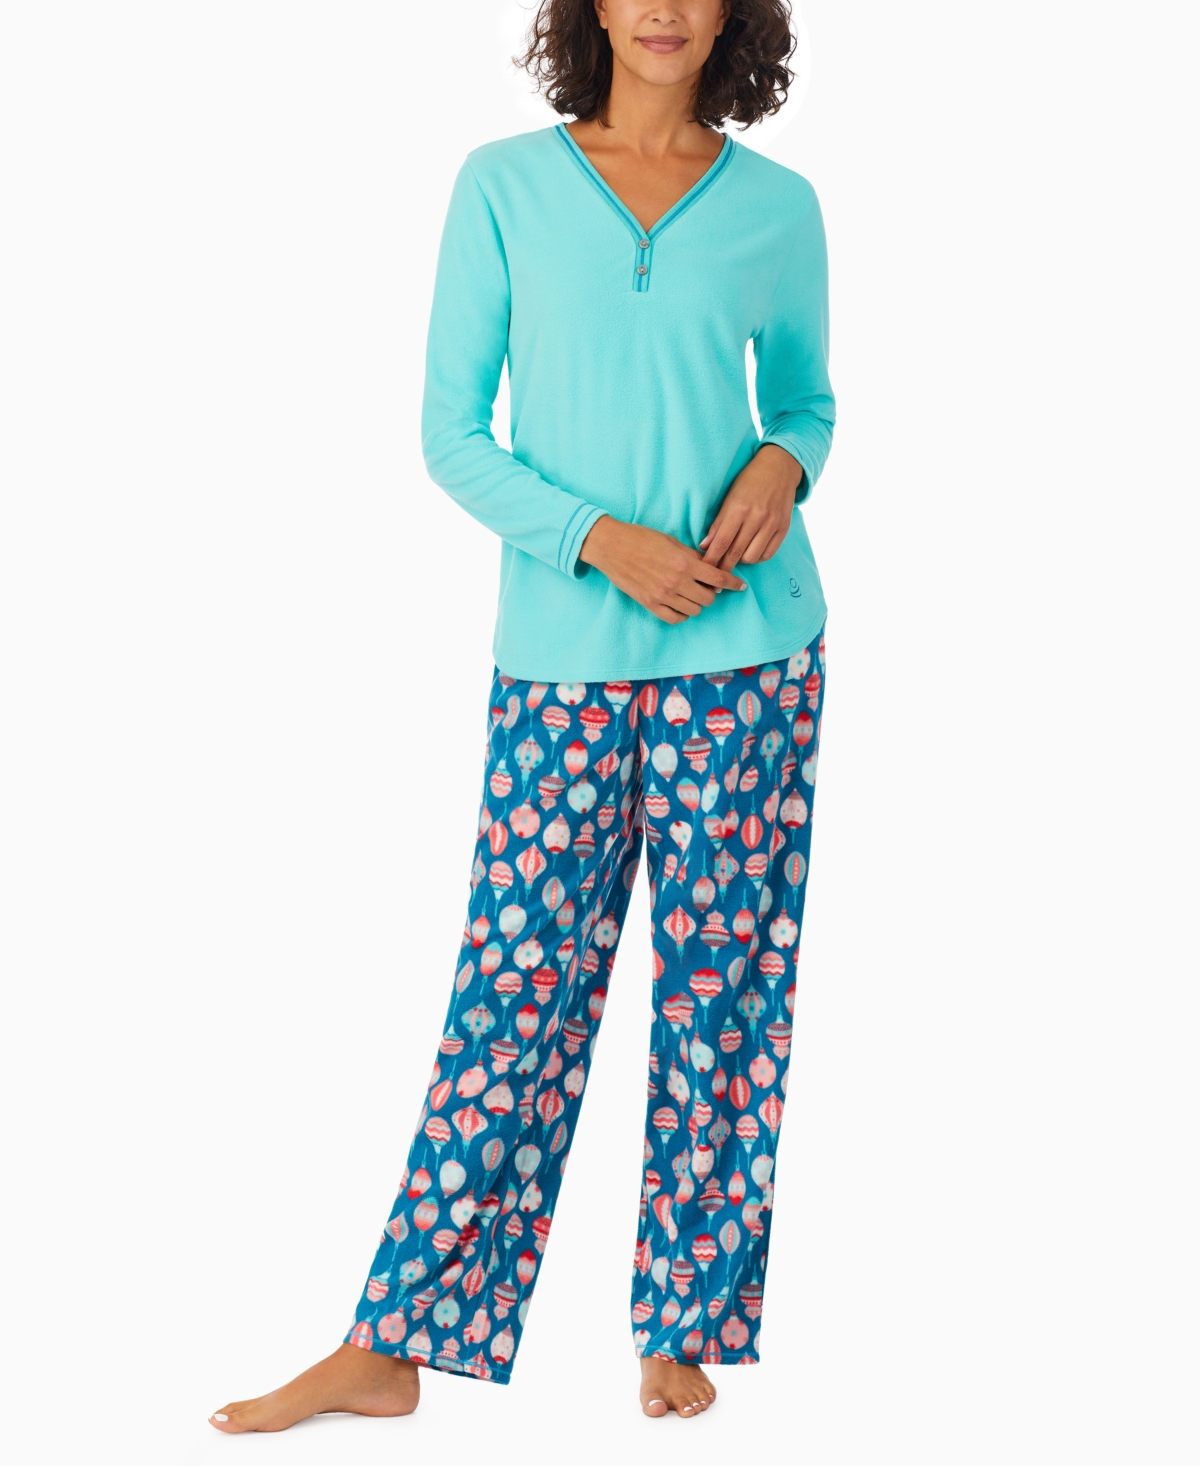 Women's 2-Pc. Fleece Long-Sleeve Printed Pajamas Set - Teal Print